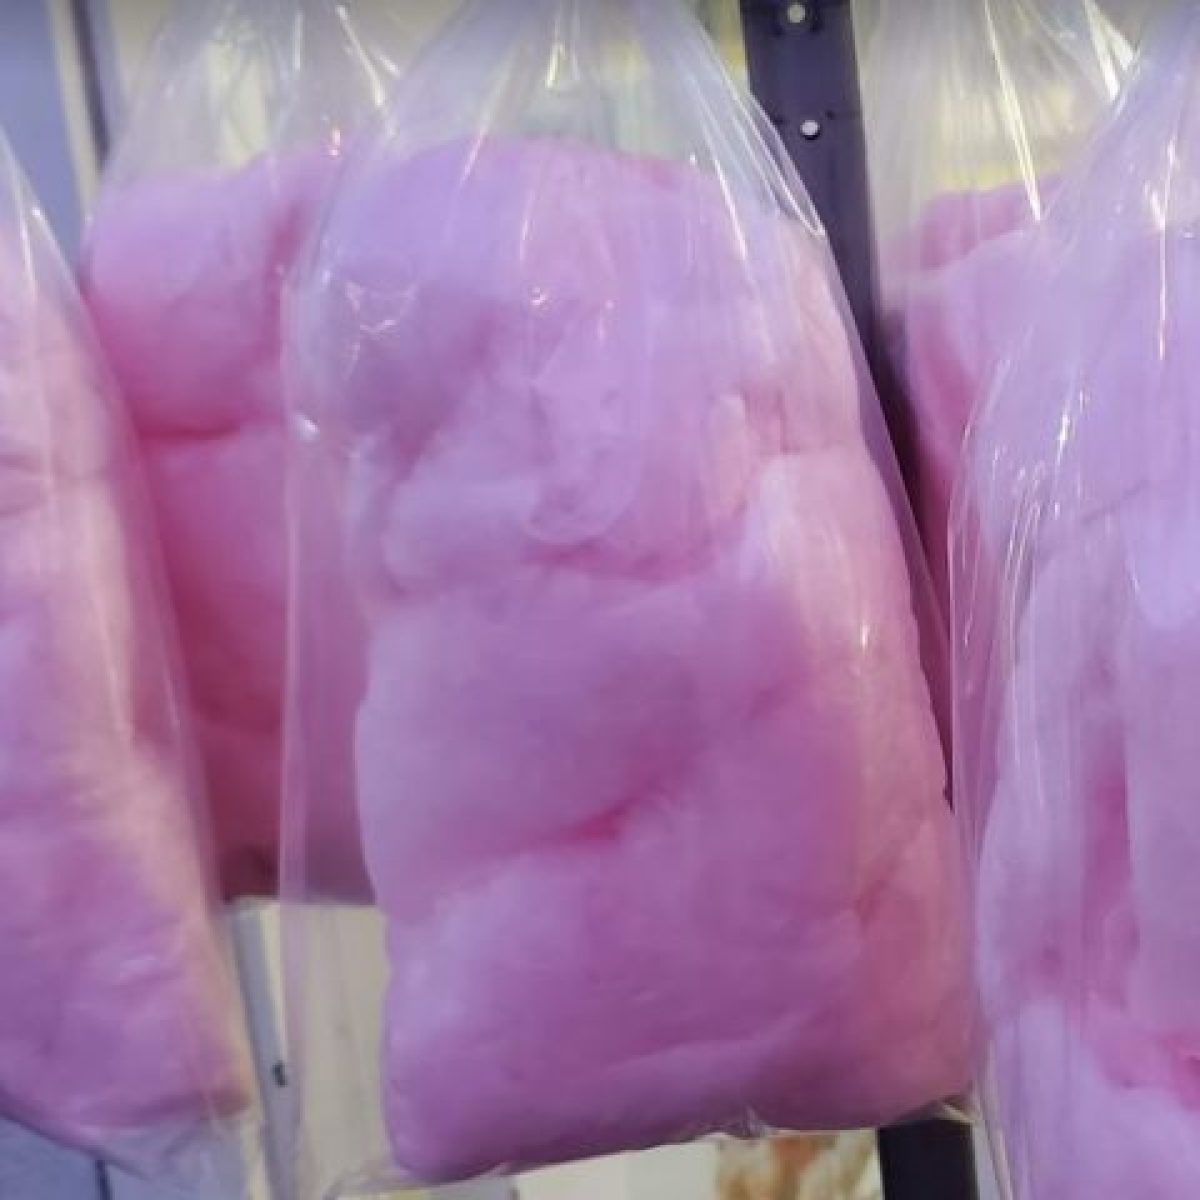 Cotton Candy – 1 oz Pre-made Bags (50)